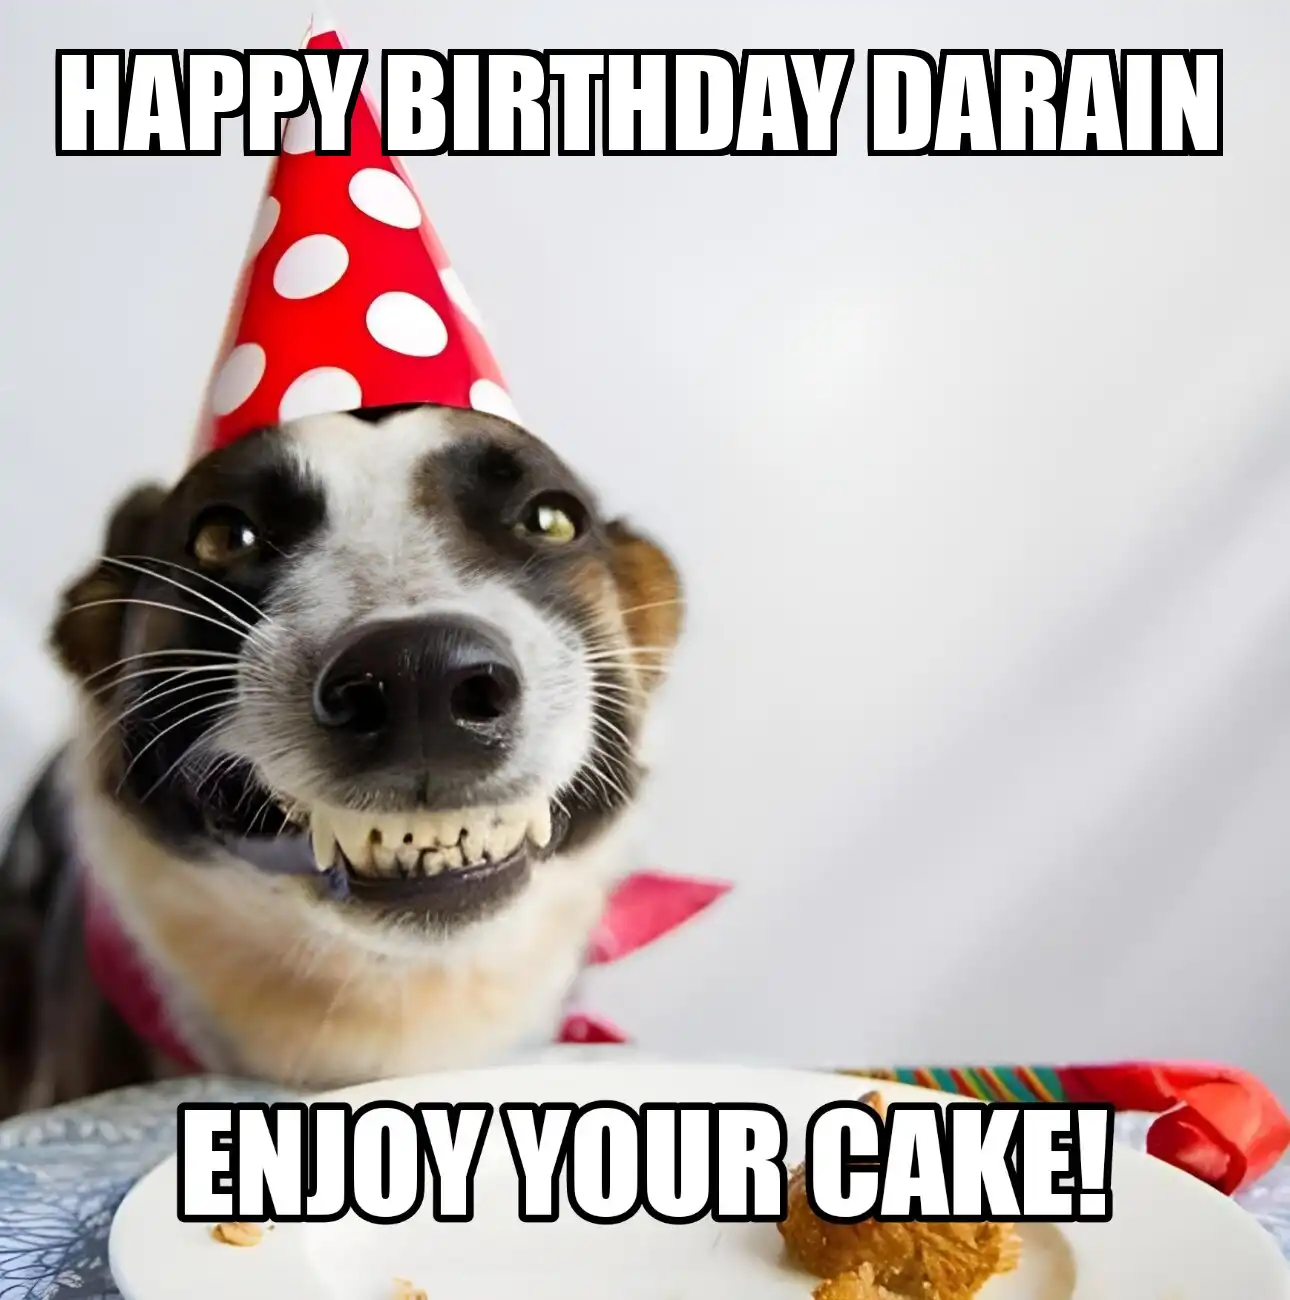 Happy Birthday Darain Enjoy Your Cake Dog Meme